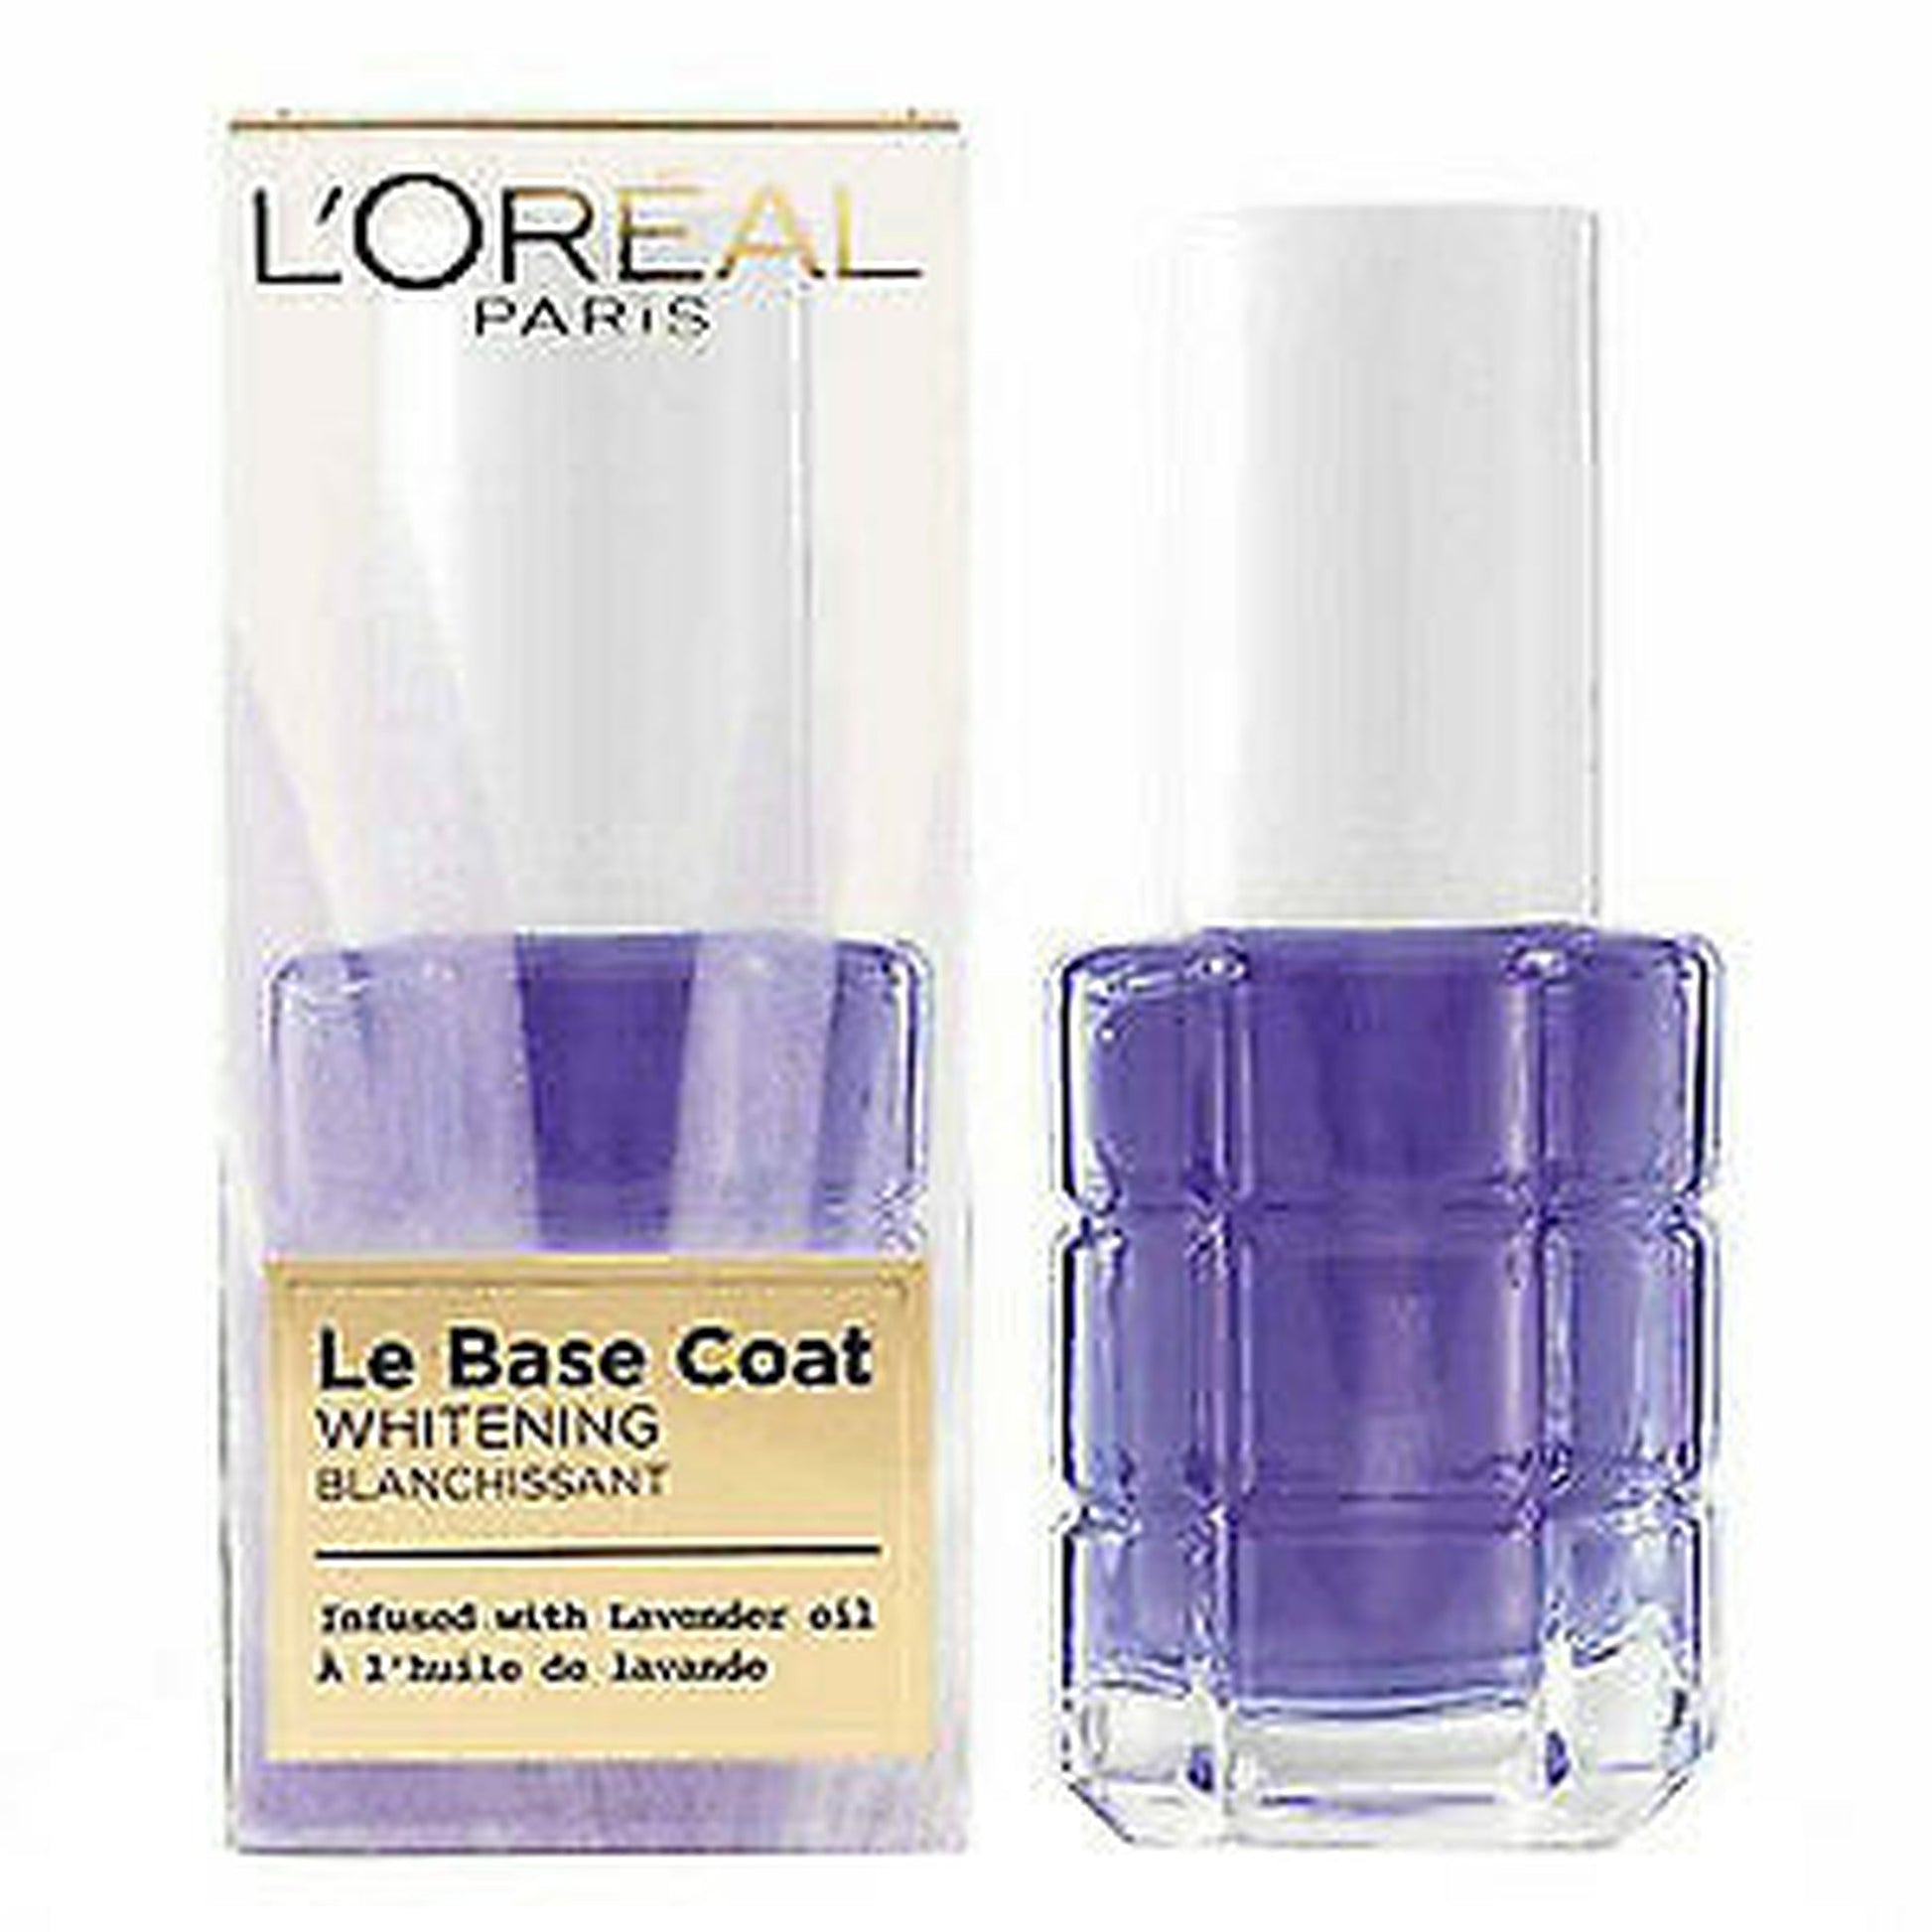 L'Oreal Le Base Coat Whitening Lavender-L'Oreal-BeautyNmakeup.co.uk